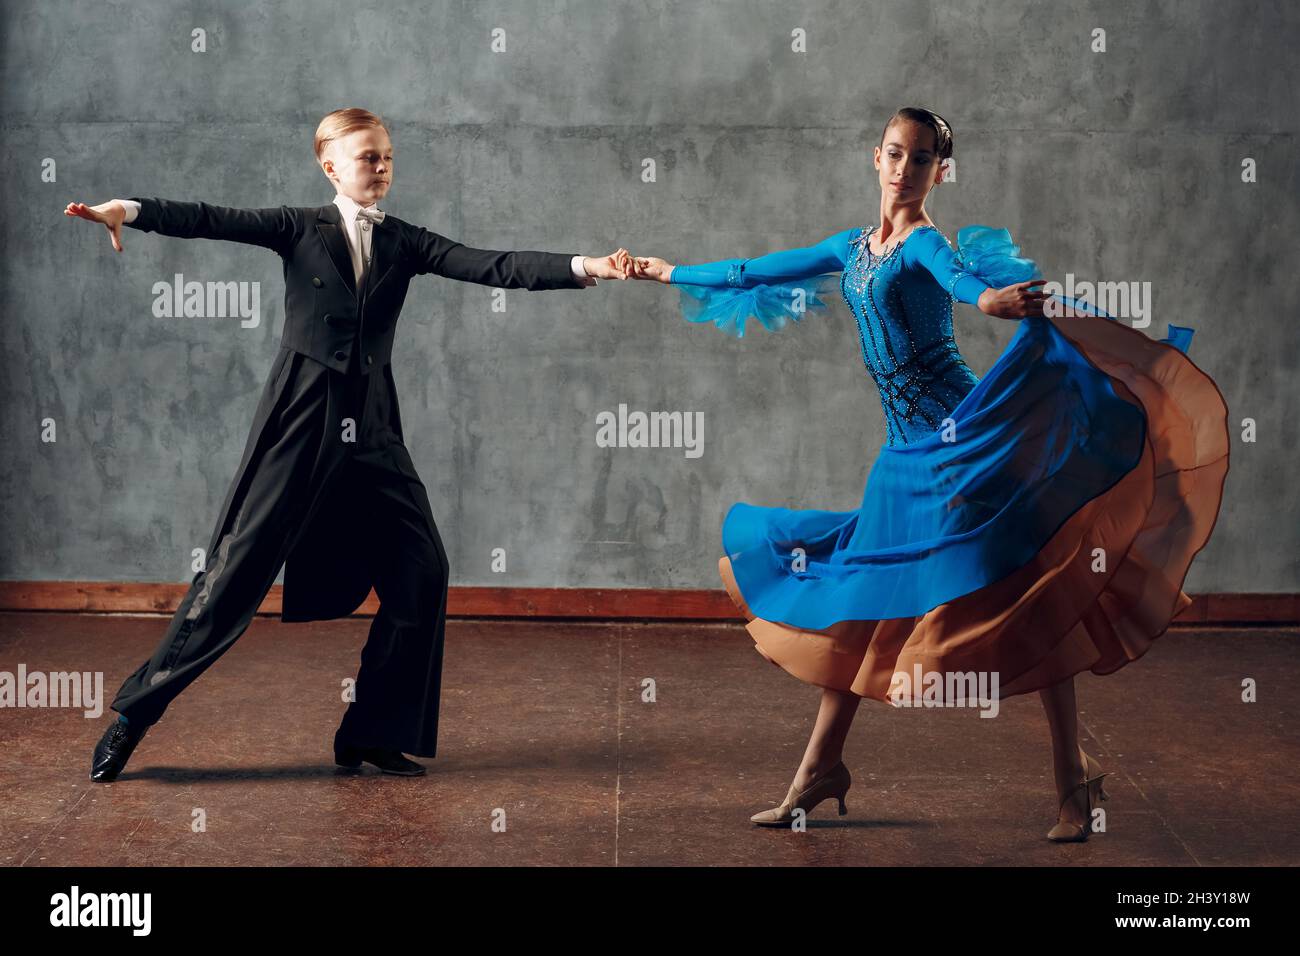 Tanz im Ballsaal. Junger Mann und Frau tanzen Foxtrot. Stockfoto